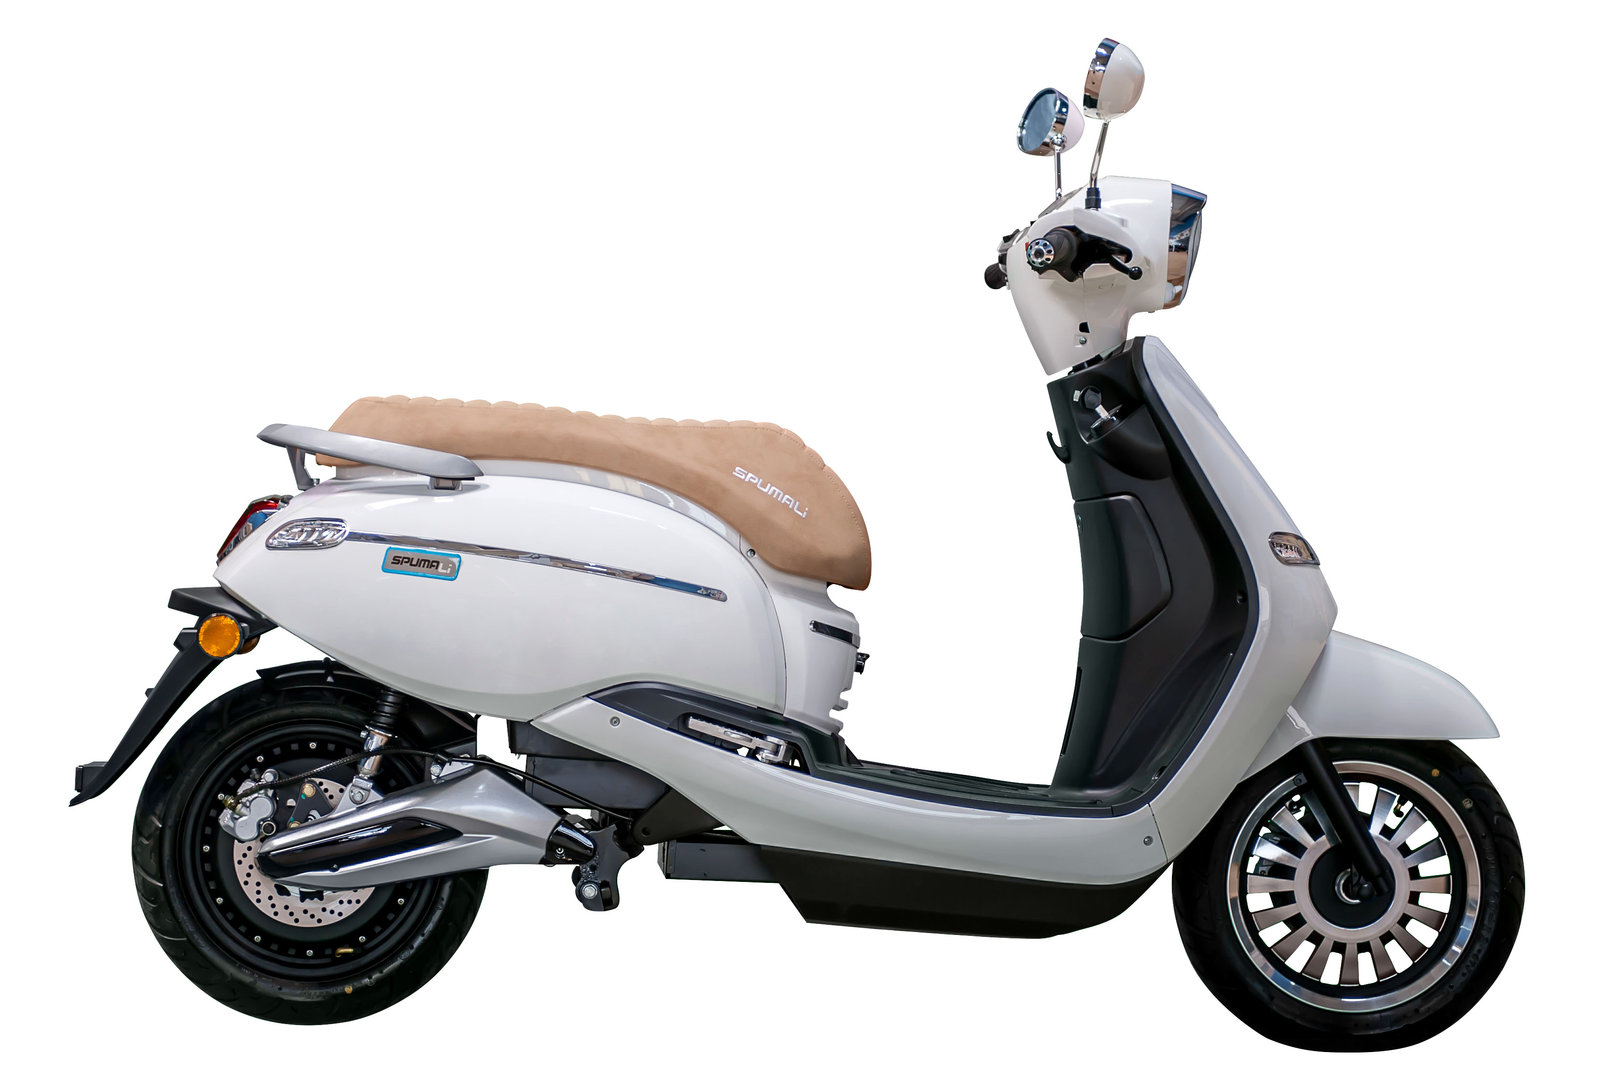 Ebroh pone a la venta el scooter eléctrico Spuma Li 5K